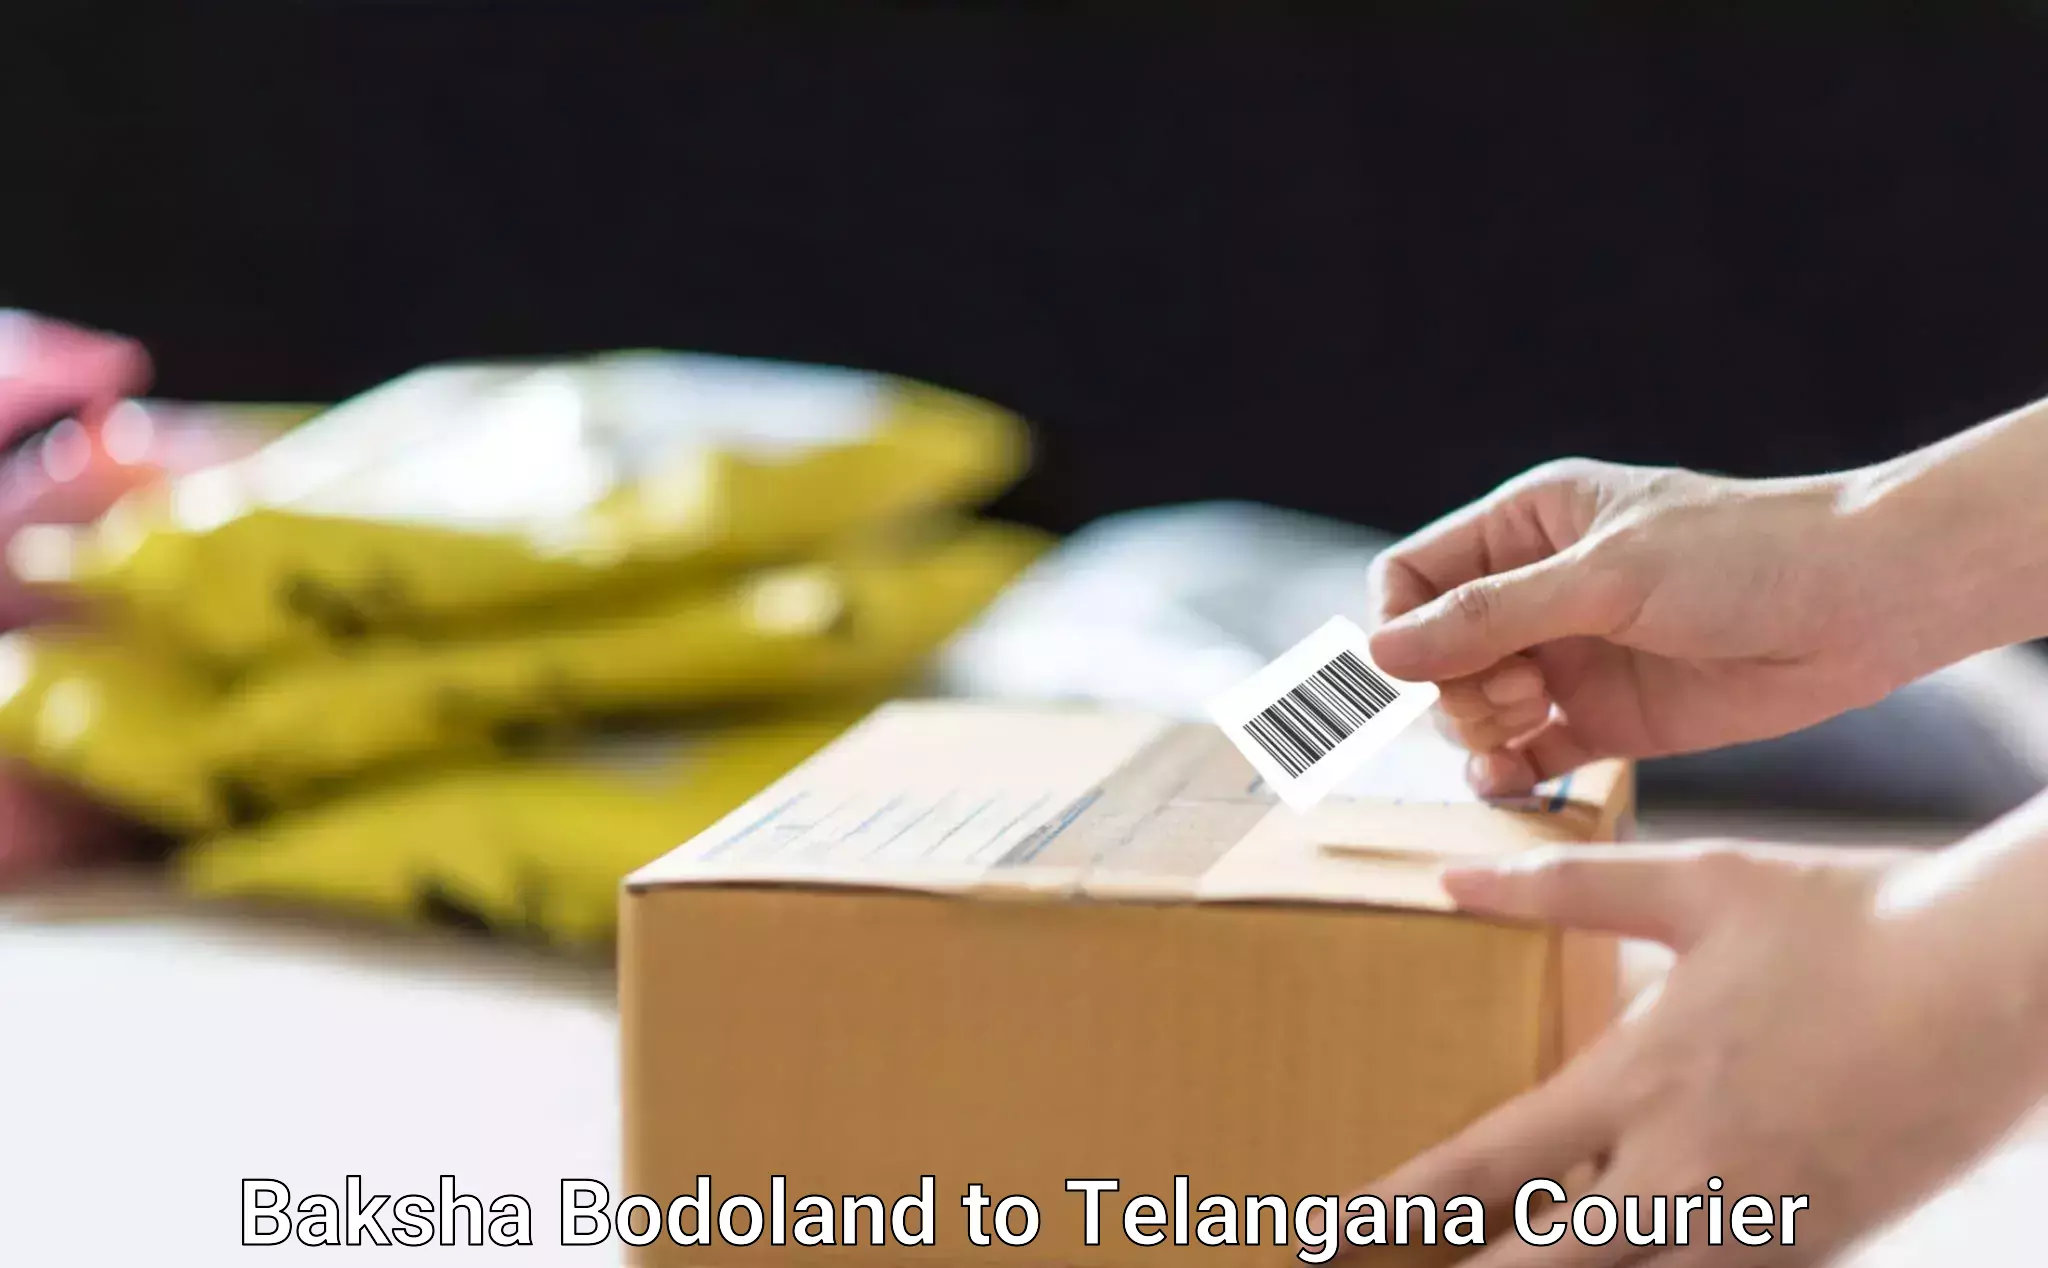 Emergency parcel delivery in Baksha Bodoland to Gollapalli